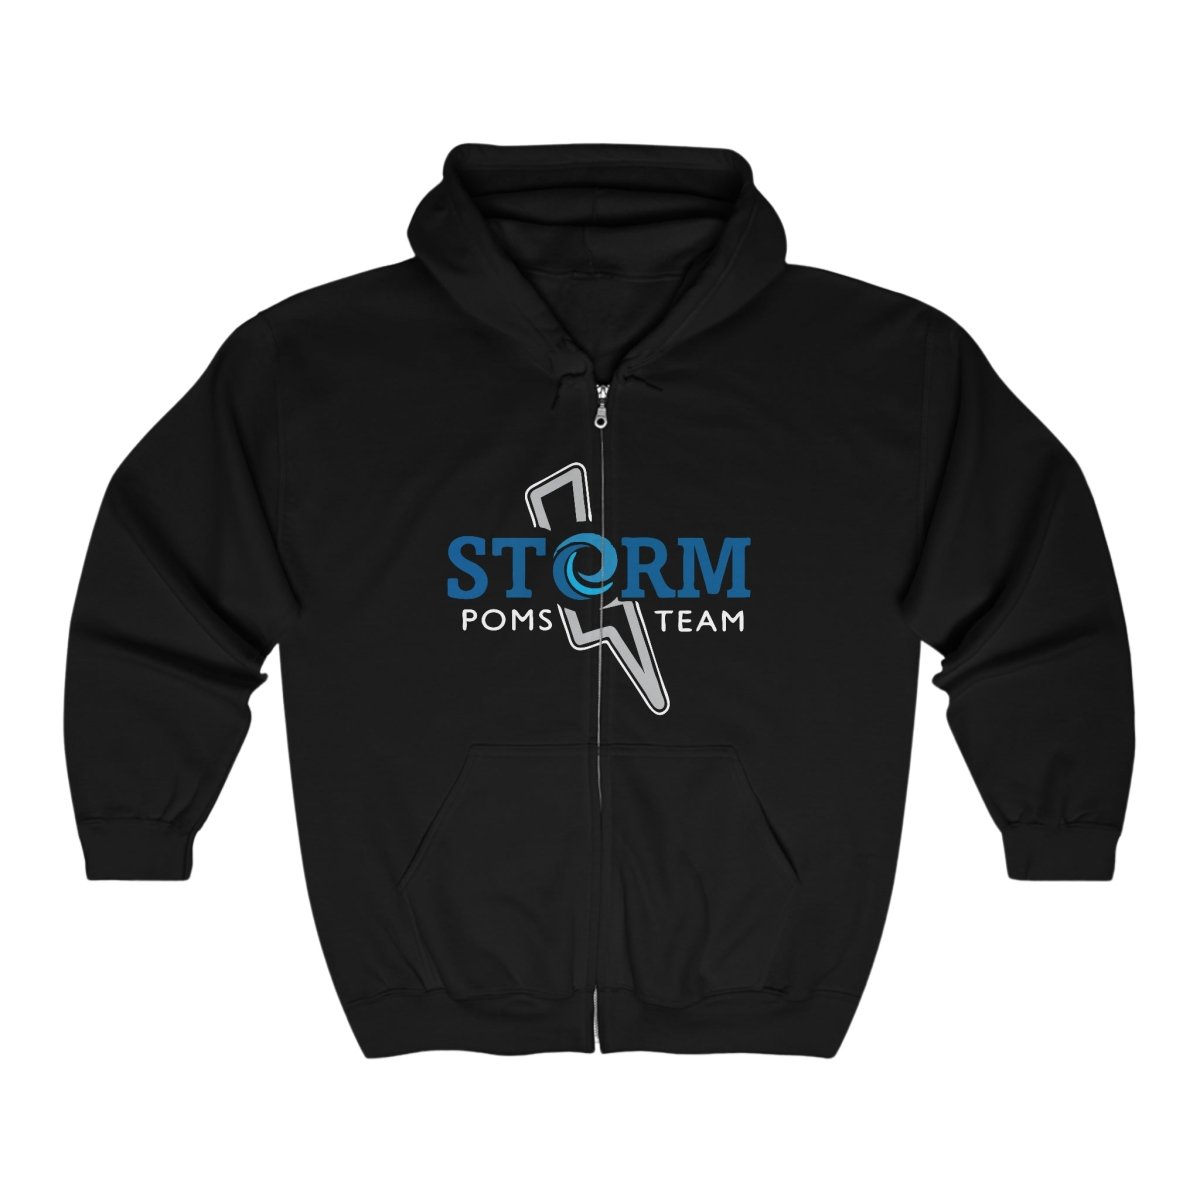 Strom Poms Team Full Zip Hooded Sweatshirt